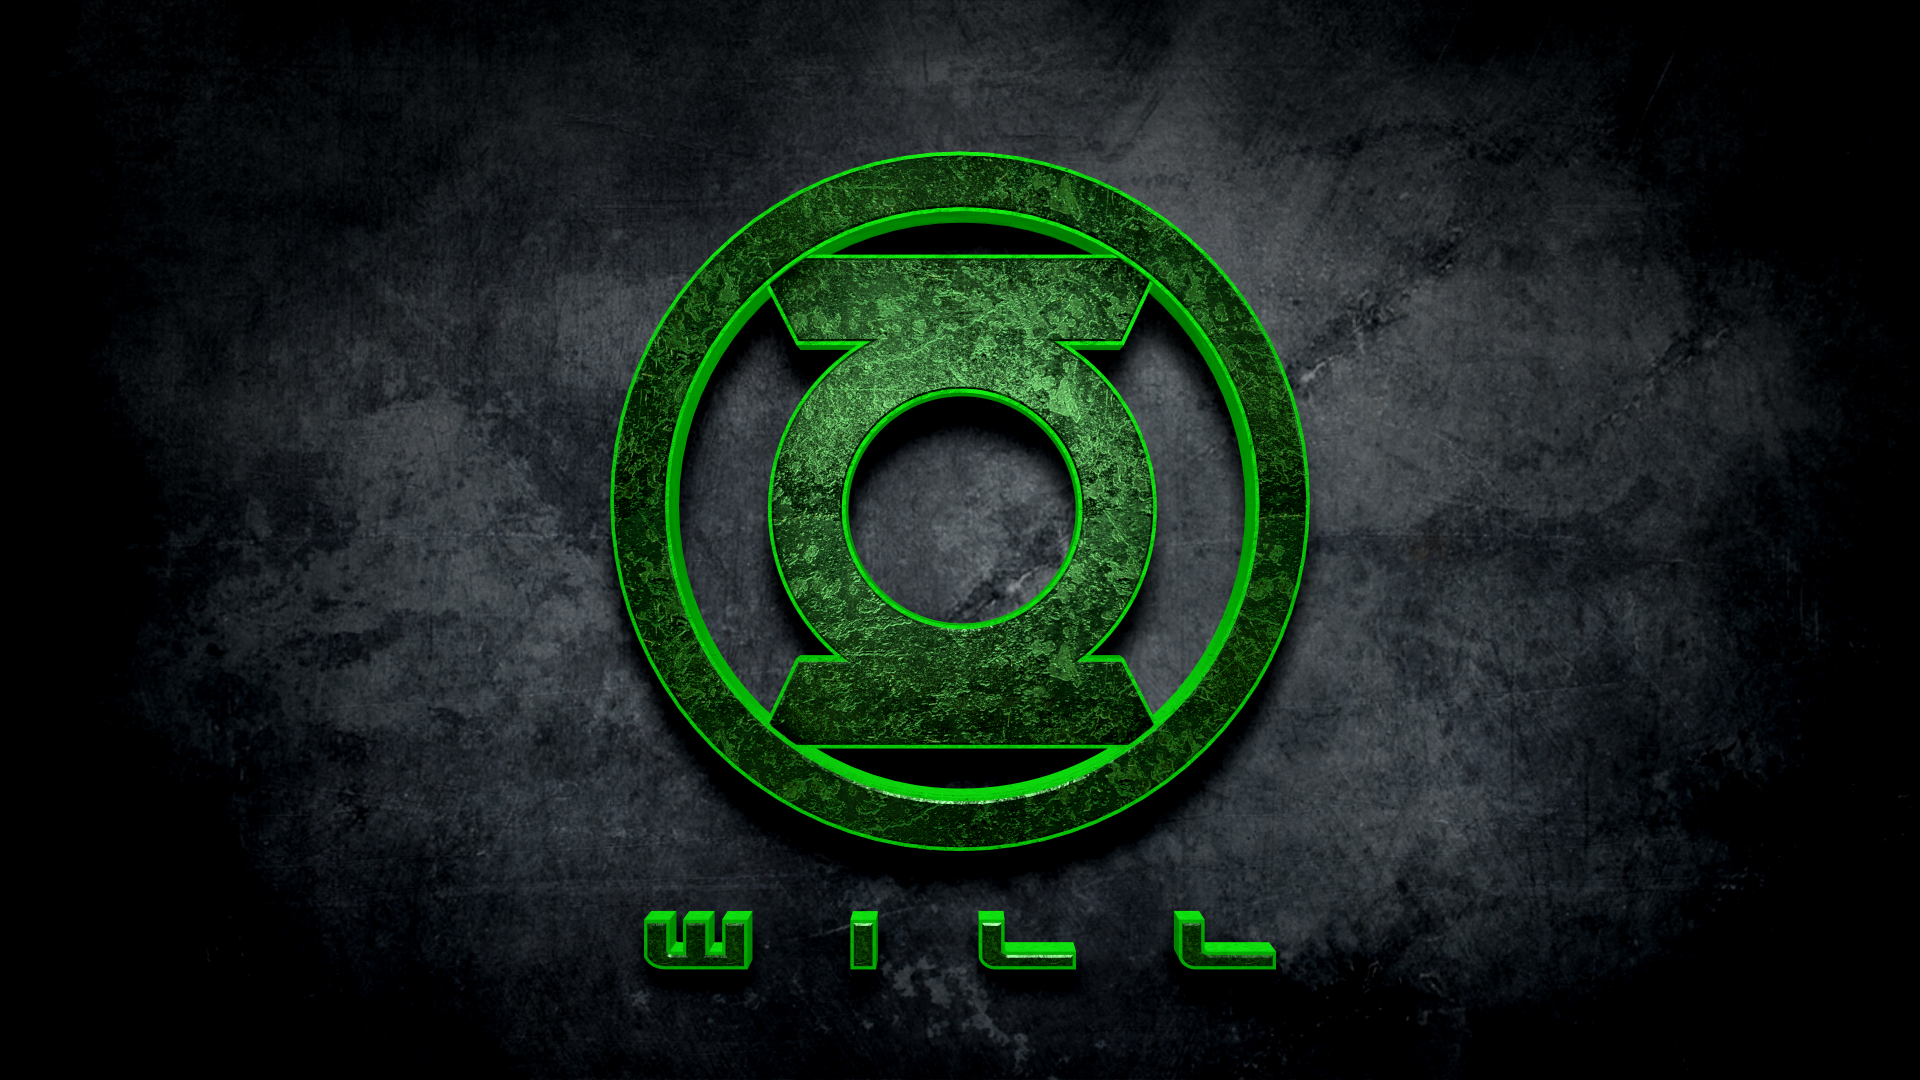 General 1920x1080 Green Lantern DC Comics logo digital art text simple background